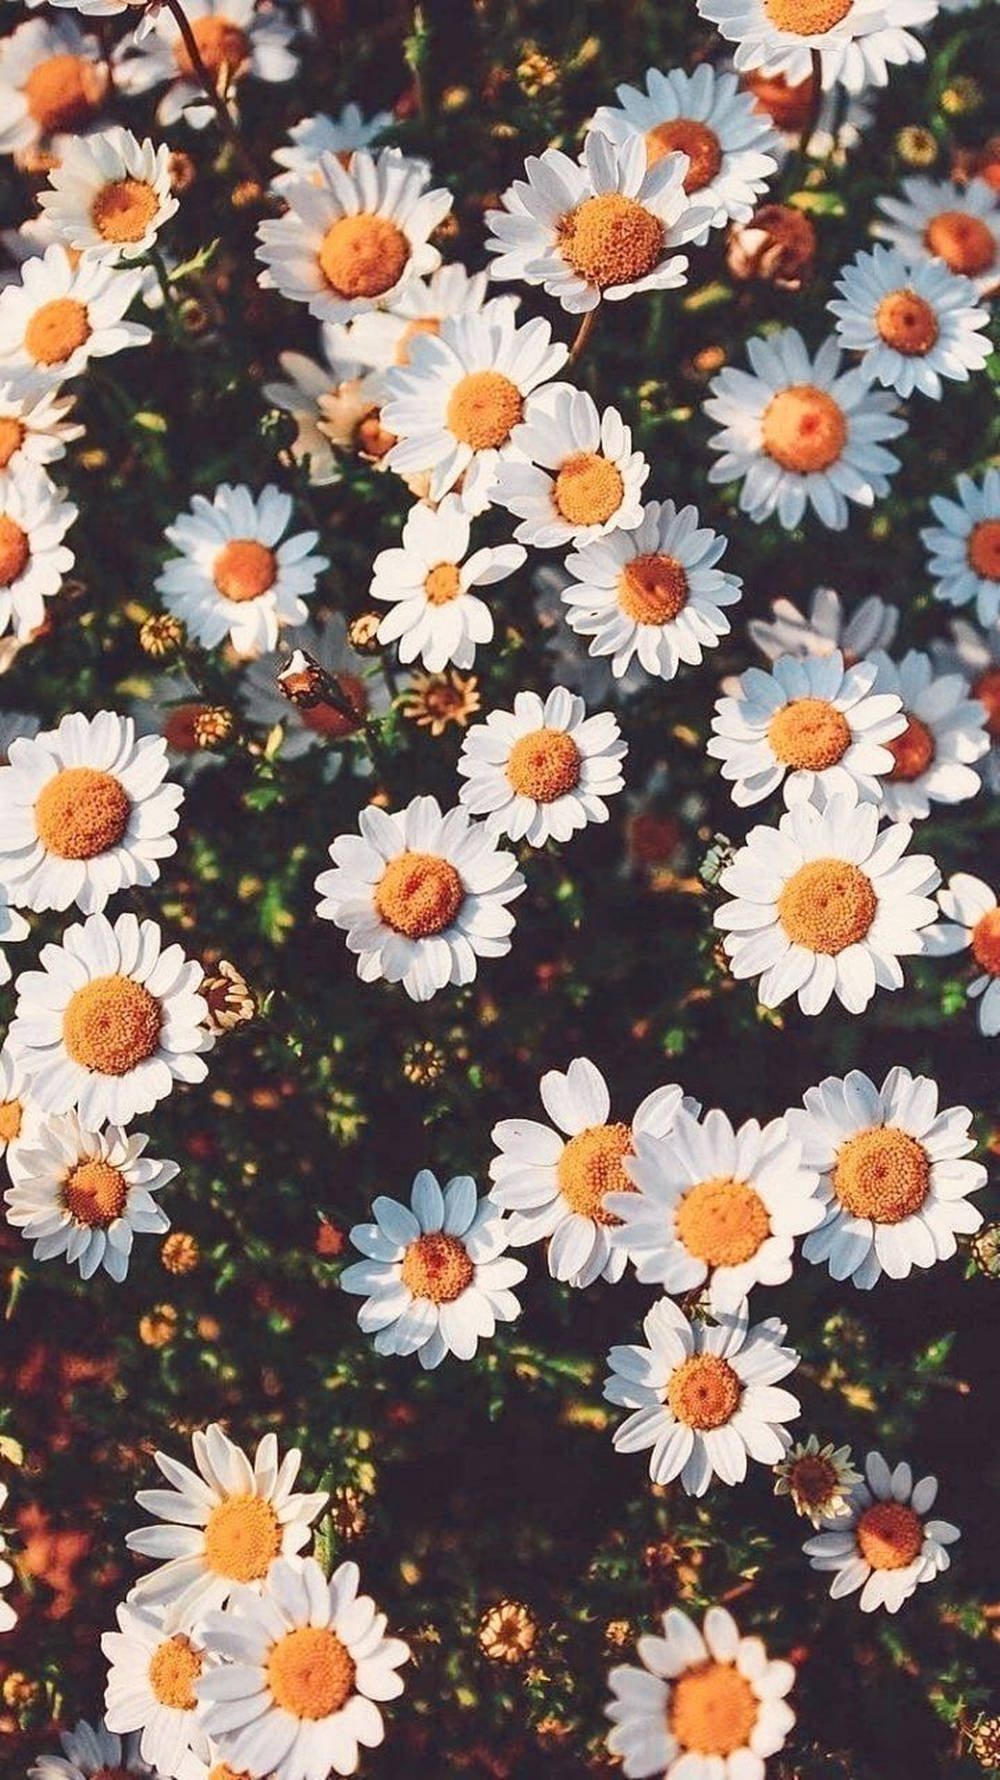 100 Beautiful Daisy Wallpapers For Phones  Imagem de fundo para iphone  Fundos de tela iphone Margaridas